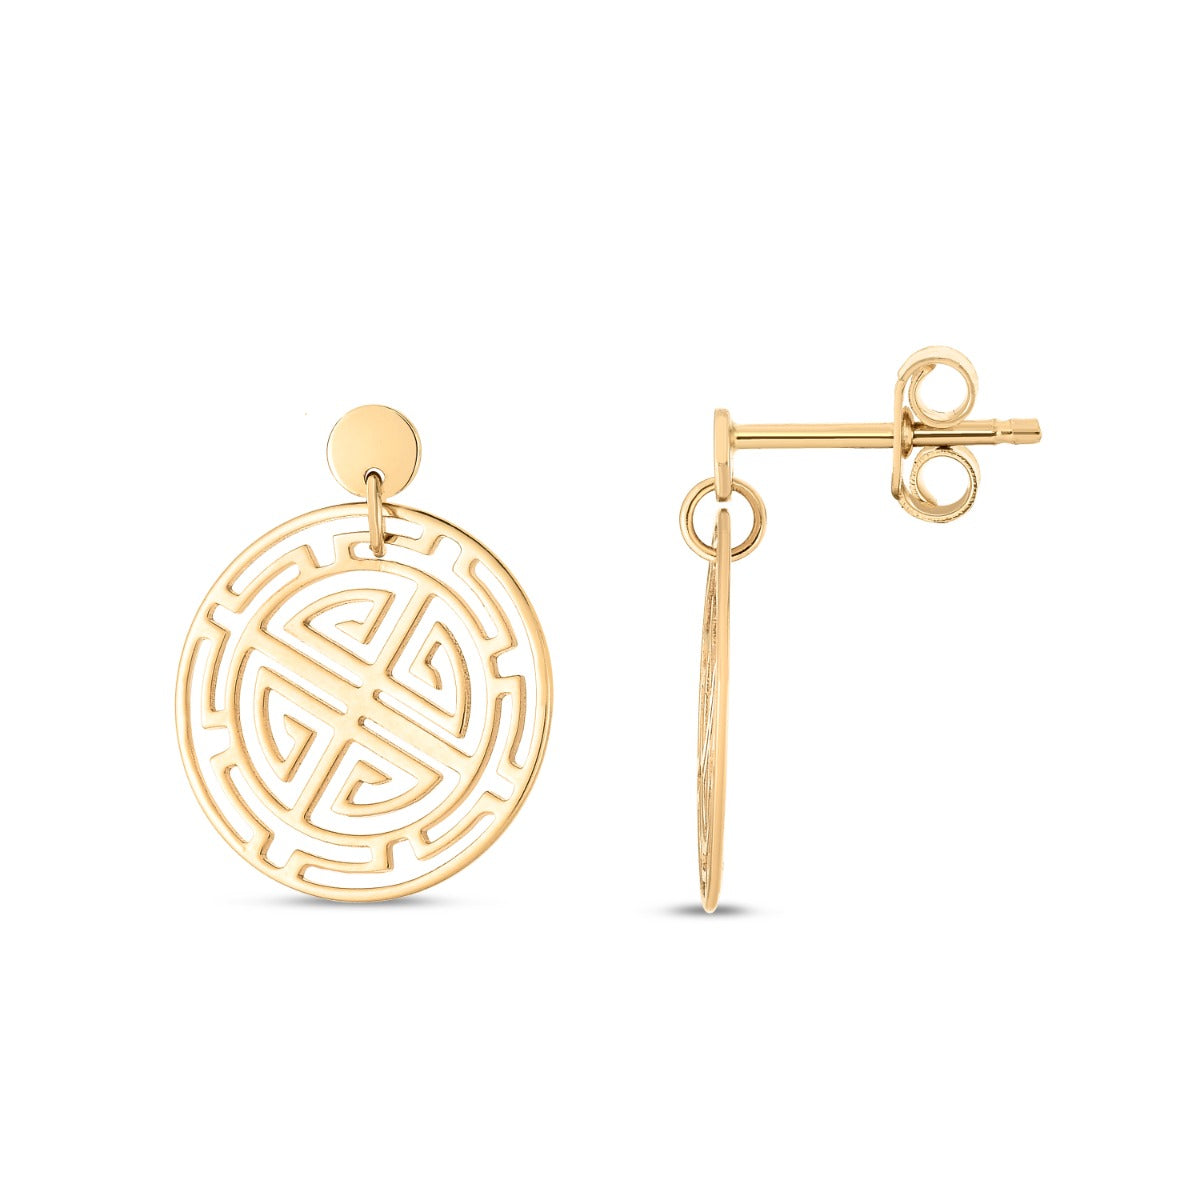 14K Gold Polished Greek Key Cutout Circle Earrings with Push Back 
Clasp